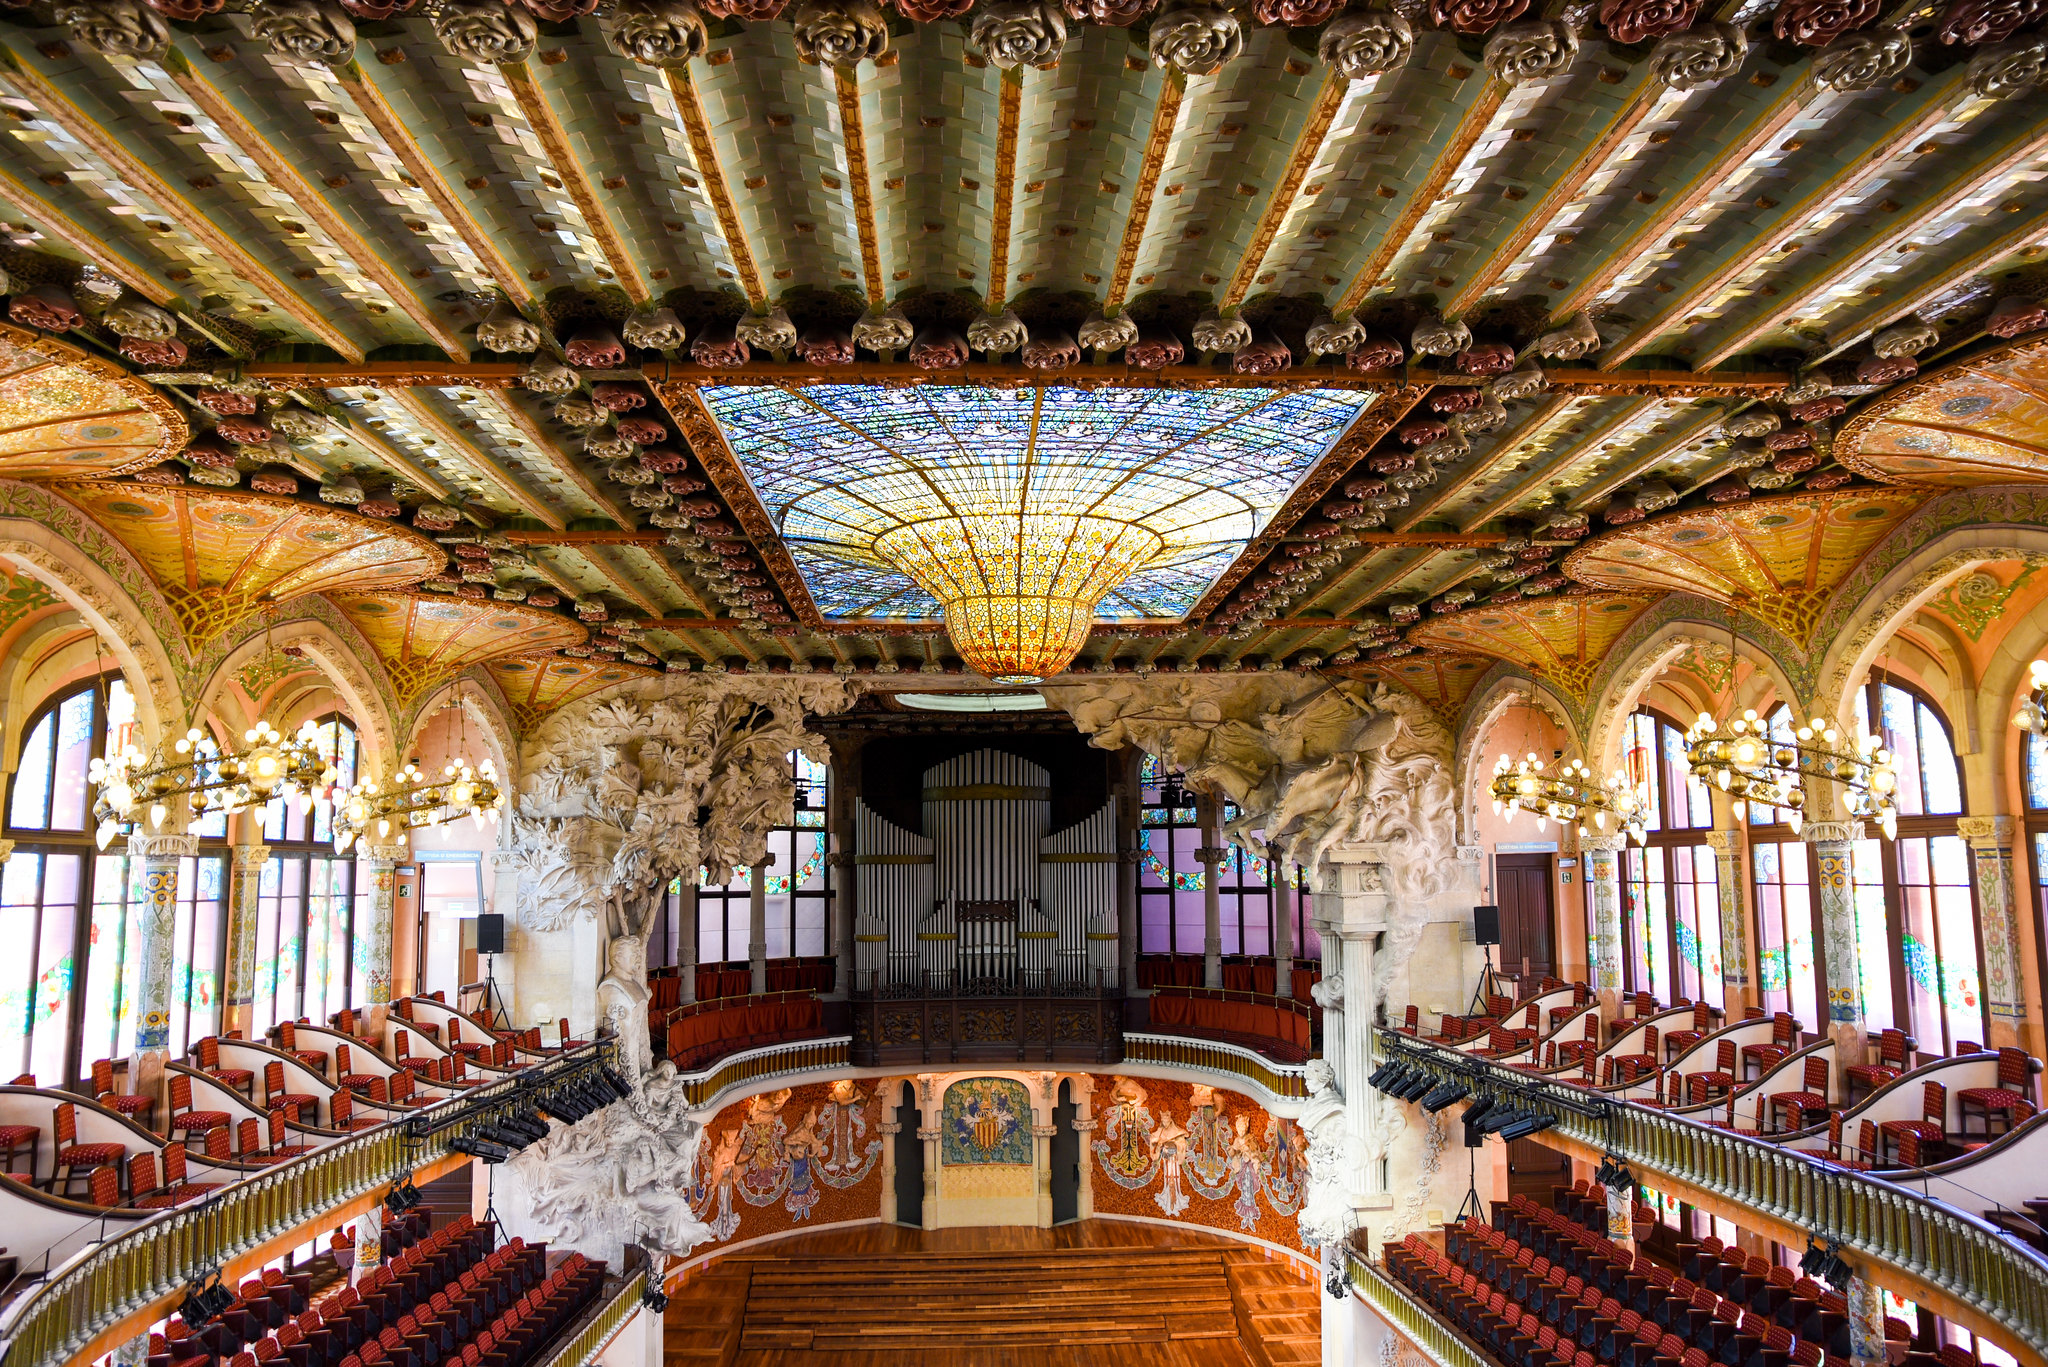 Сайт дворец музыки. Барселона дворец каталонской. Дворец каталонской музыки в Барселоне. Palau de la musica Catalana театр. Palau de la música Catalana Барселона.